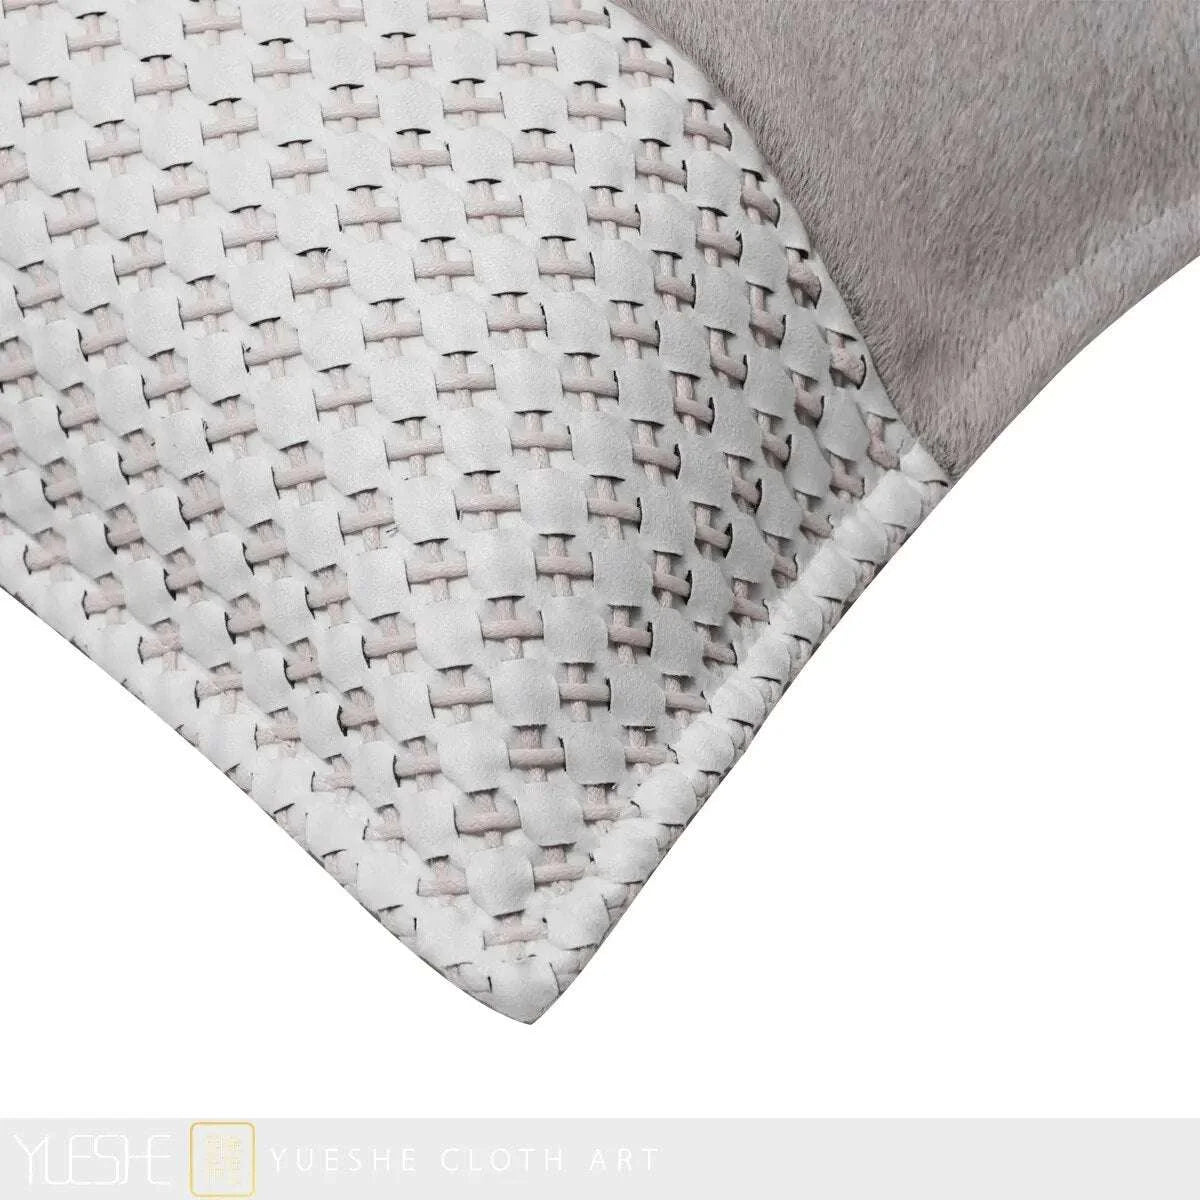 Luxurious White Leather Woven Horsehair Cushion throw pillows Julia M Home & Kitchen   